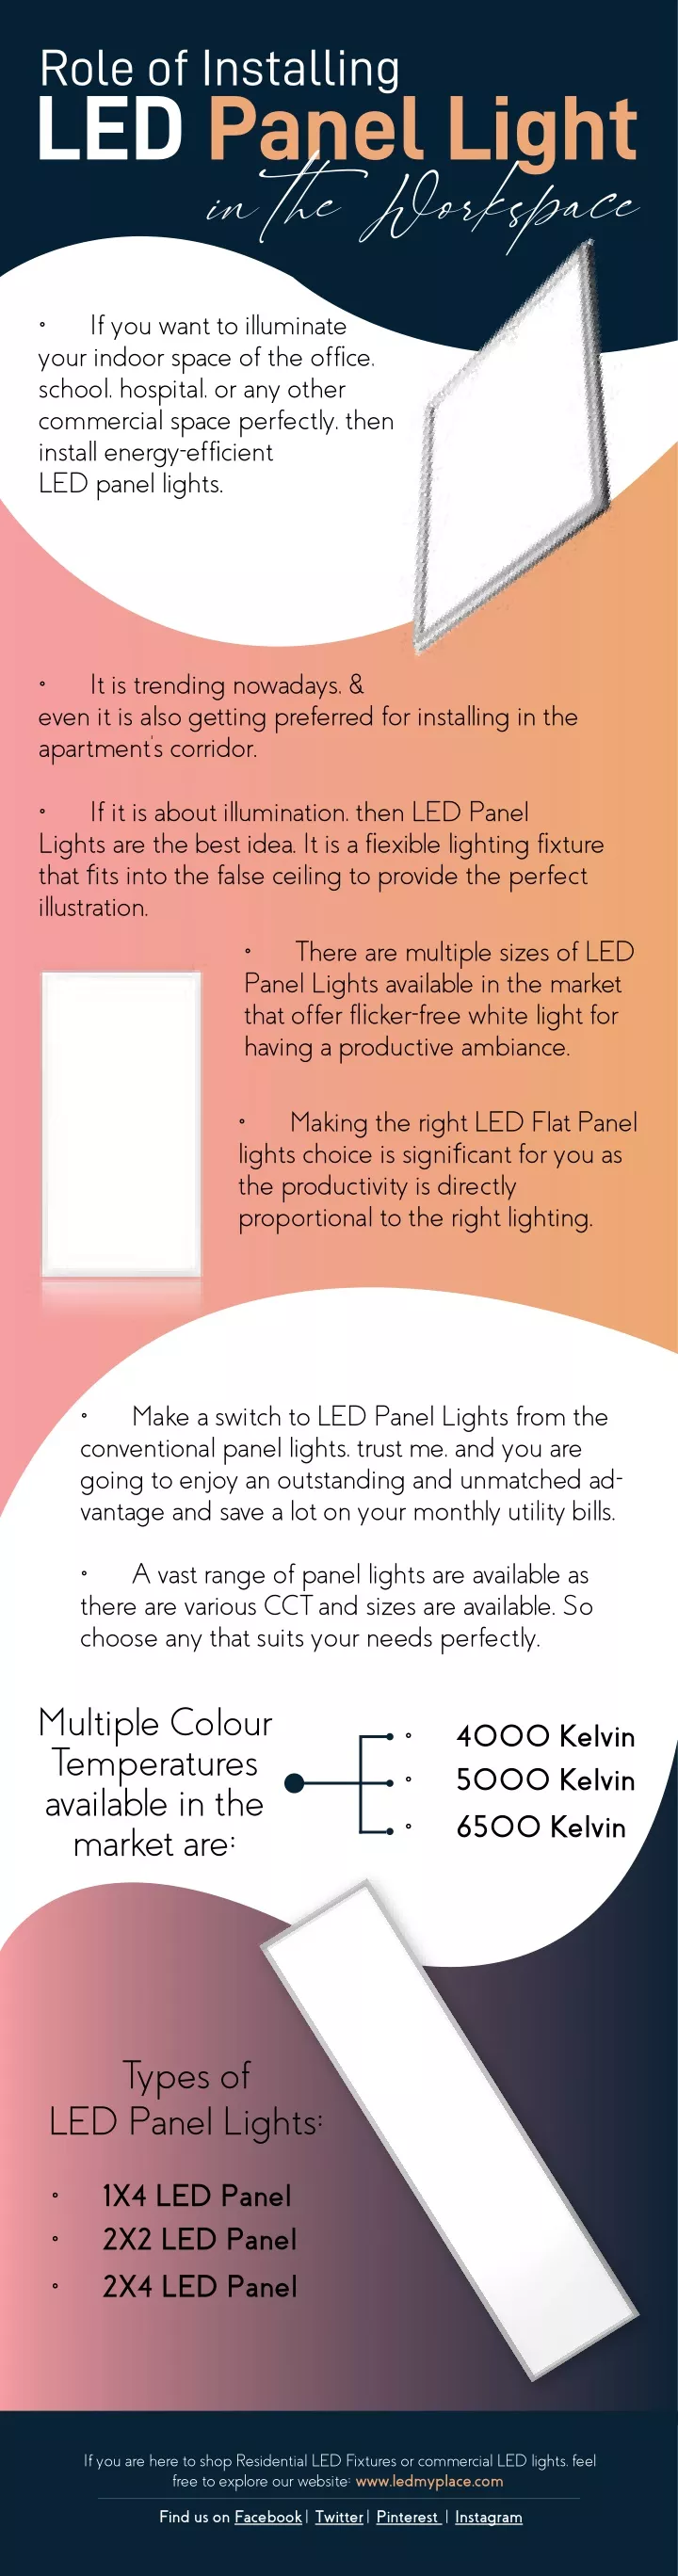 role of installing led panel light